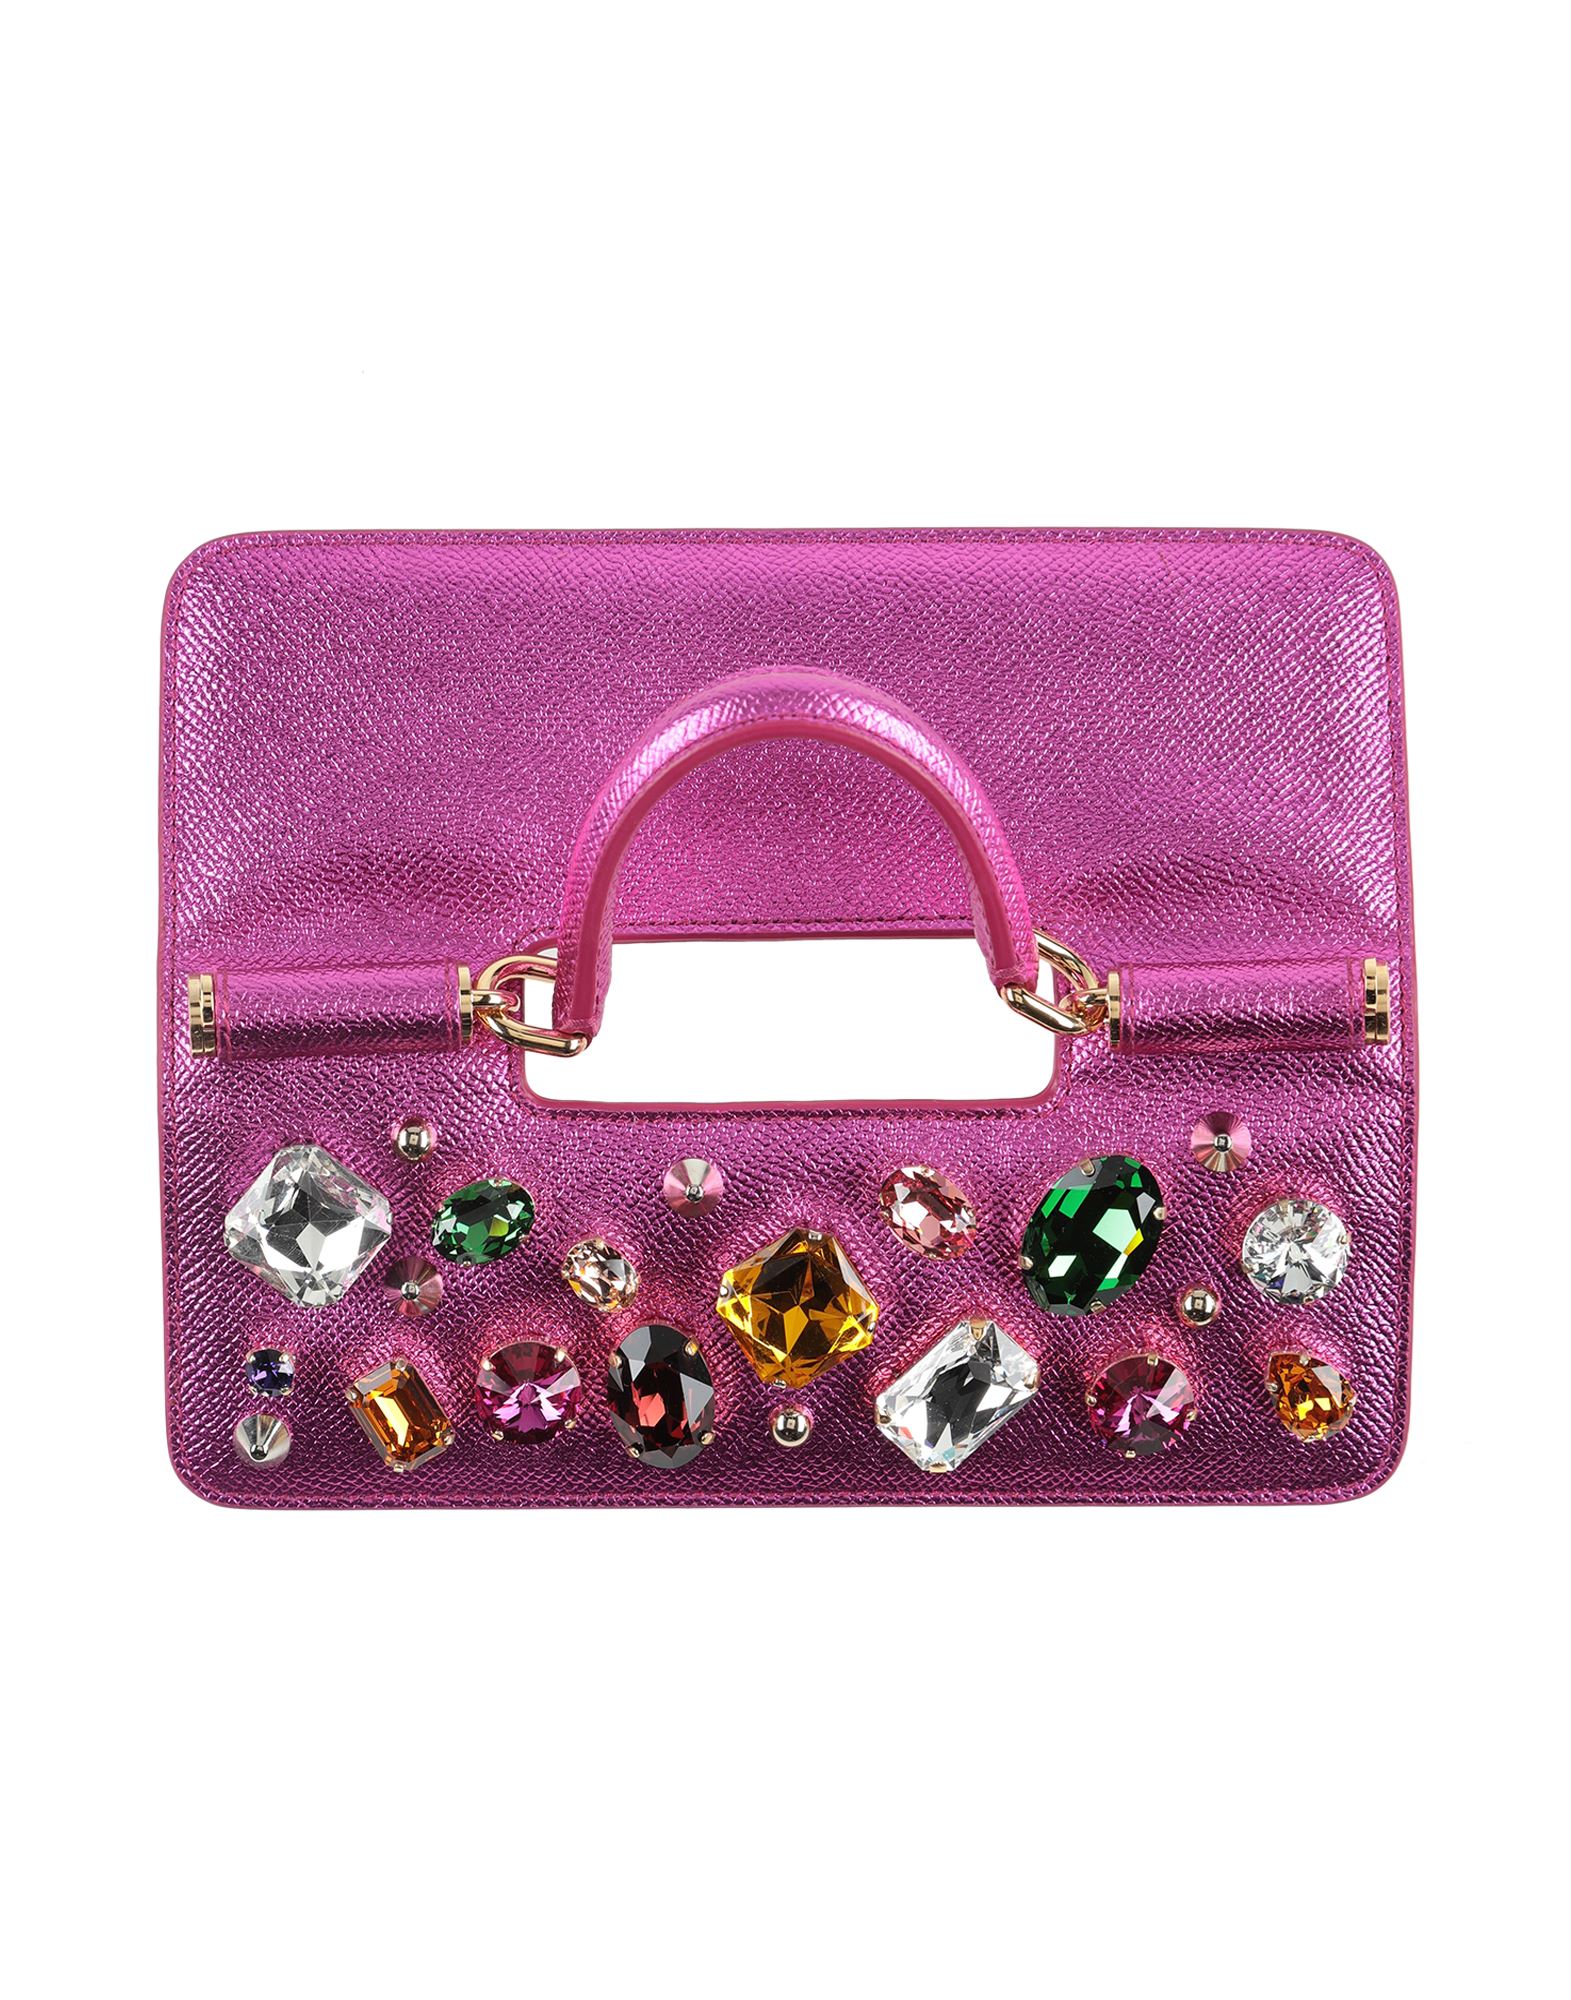 Dolce & Gabbana Bag Accessories & Charms In Fuchsia